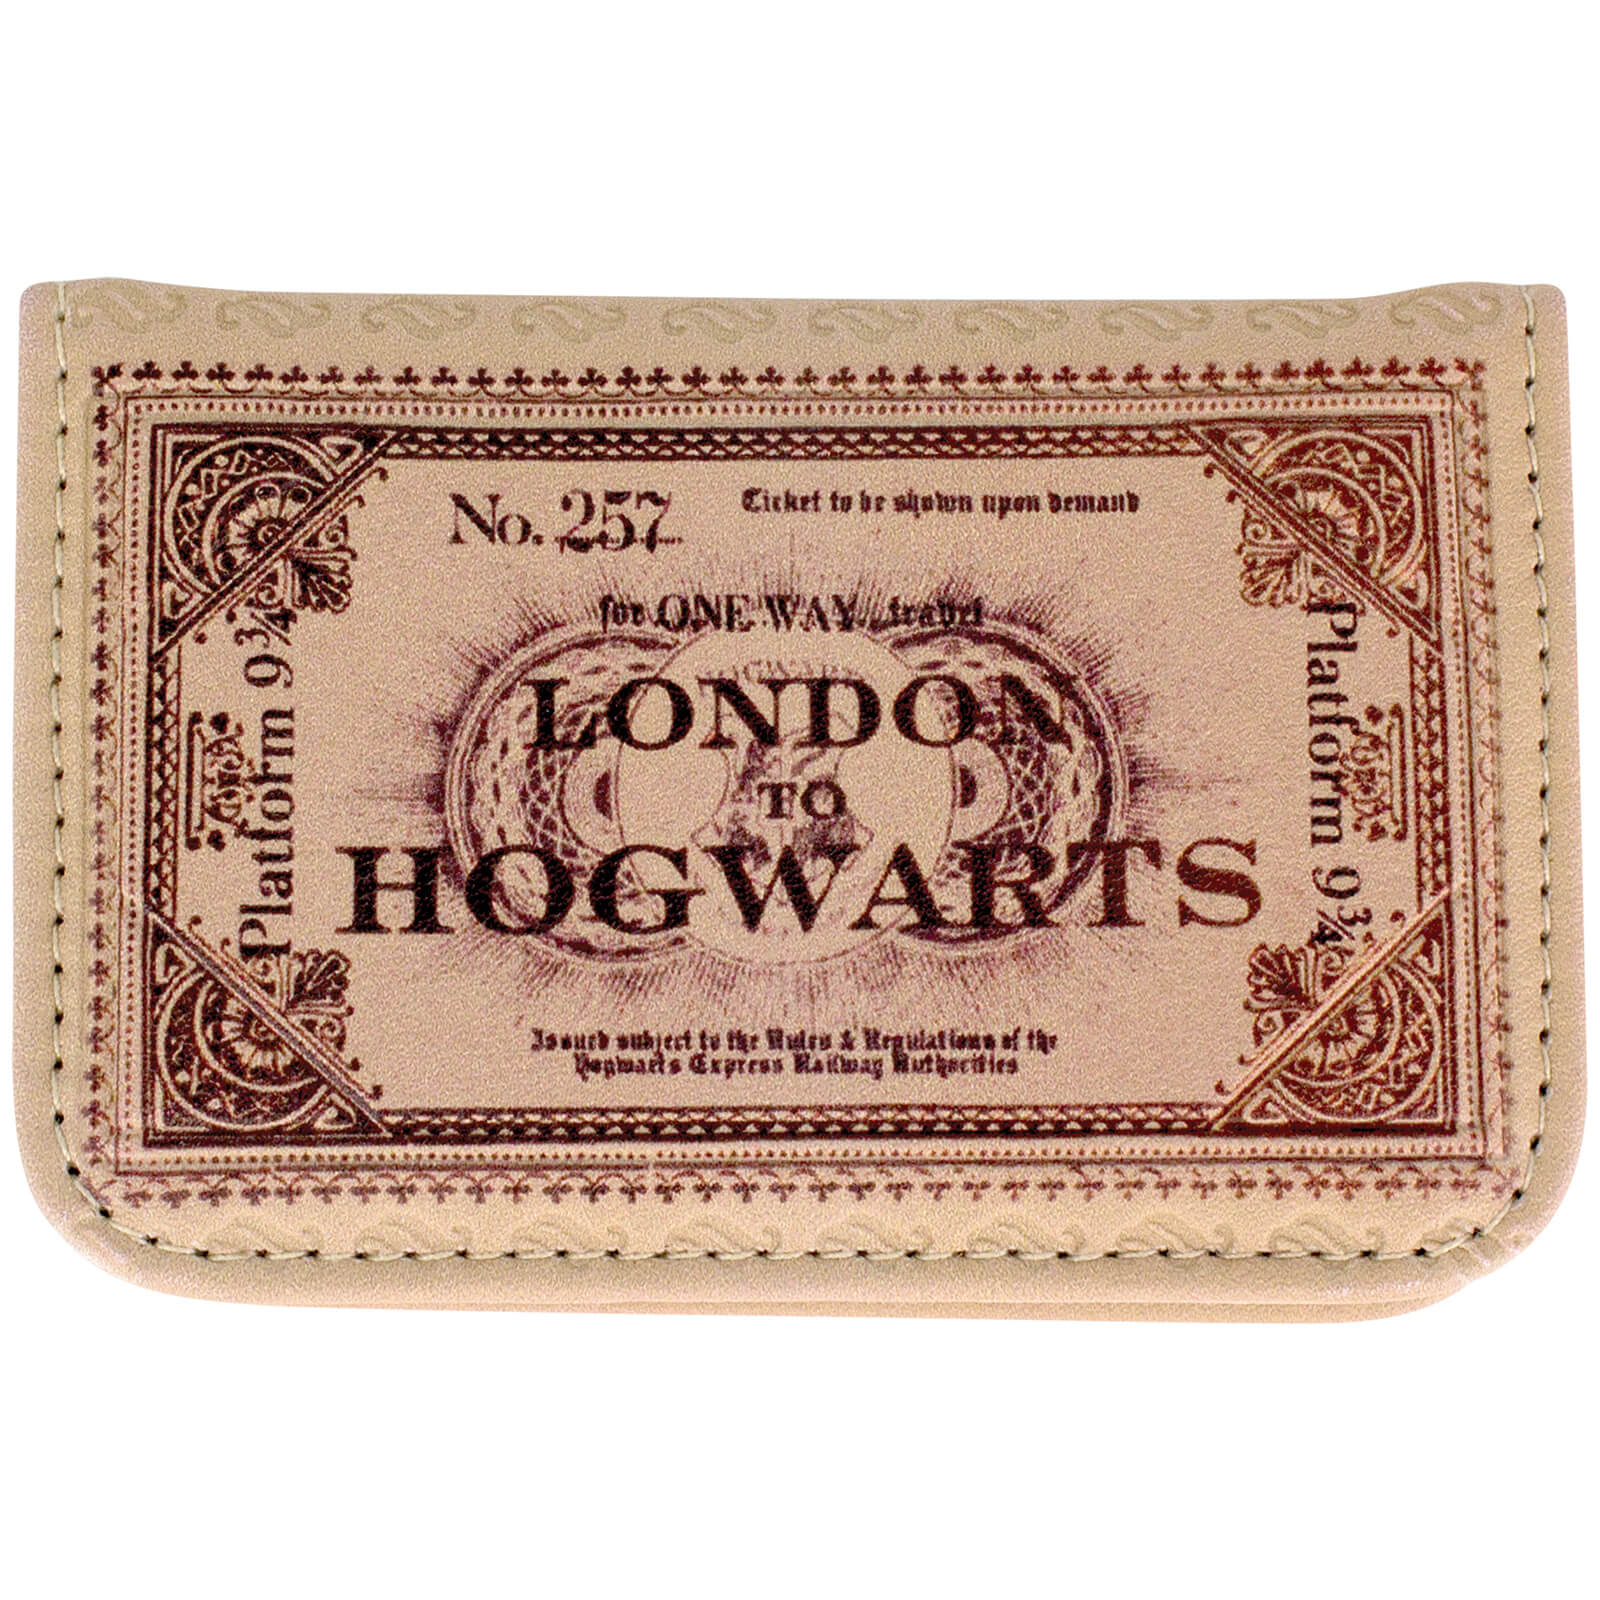 Harry Potter Travel Pass Holder London to Hogwarts